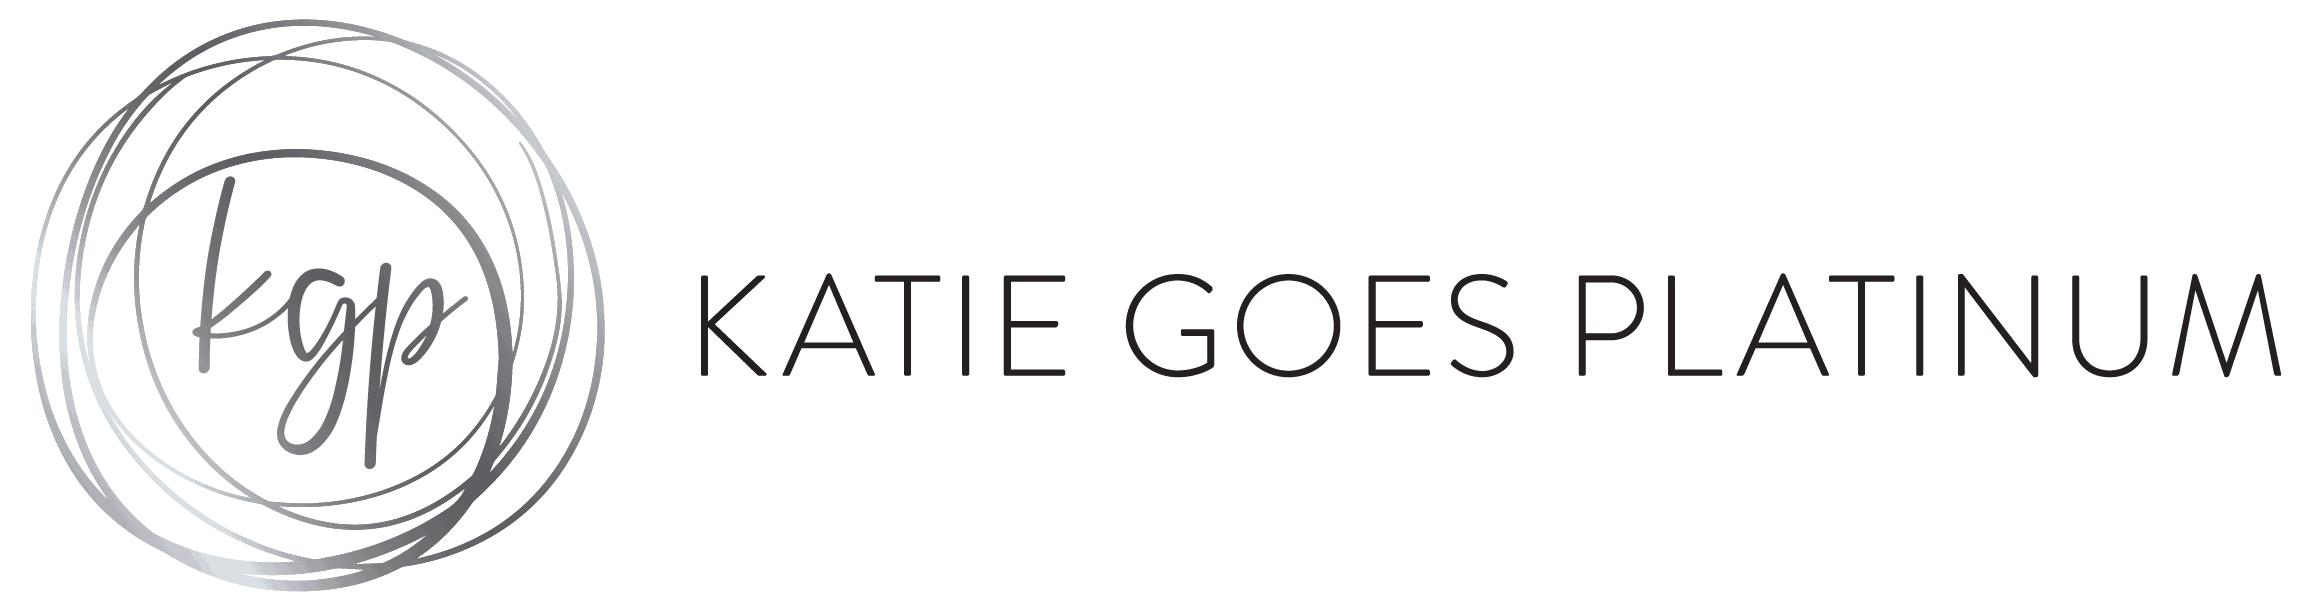 Katie goes Platinum logo